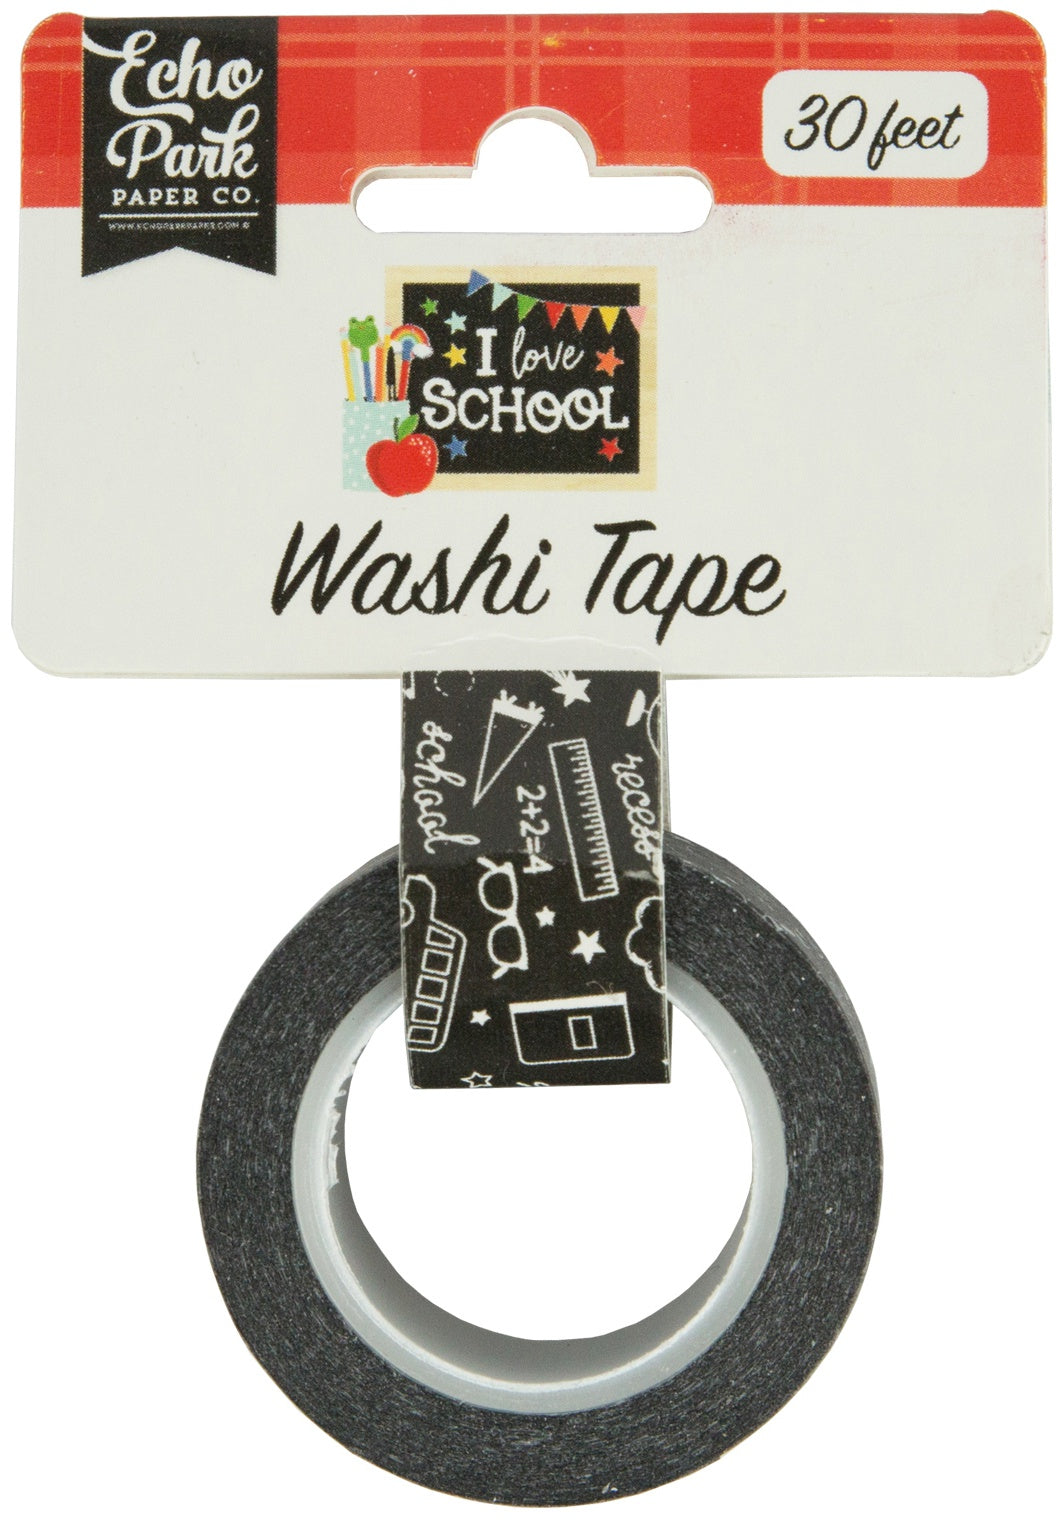 I Love School School Icons Washi Tape